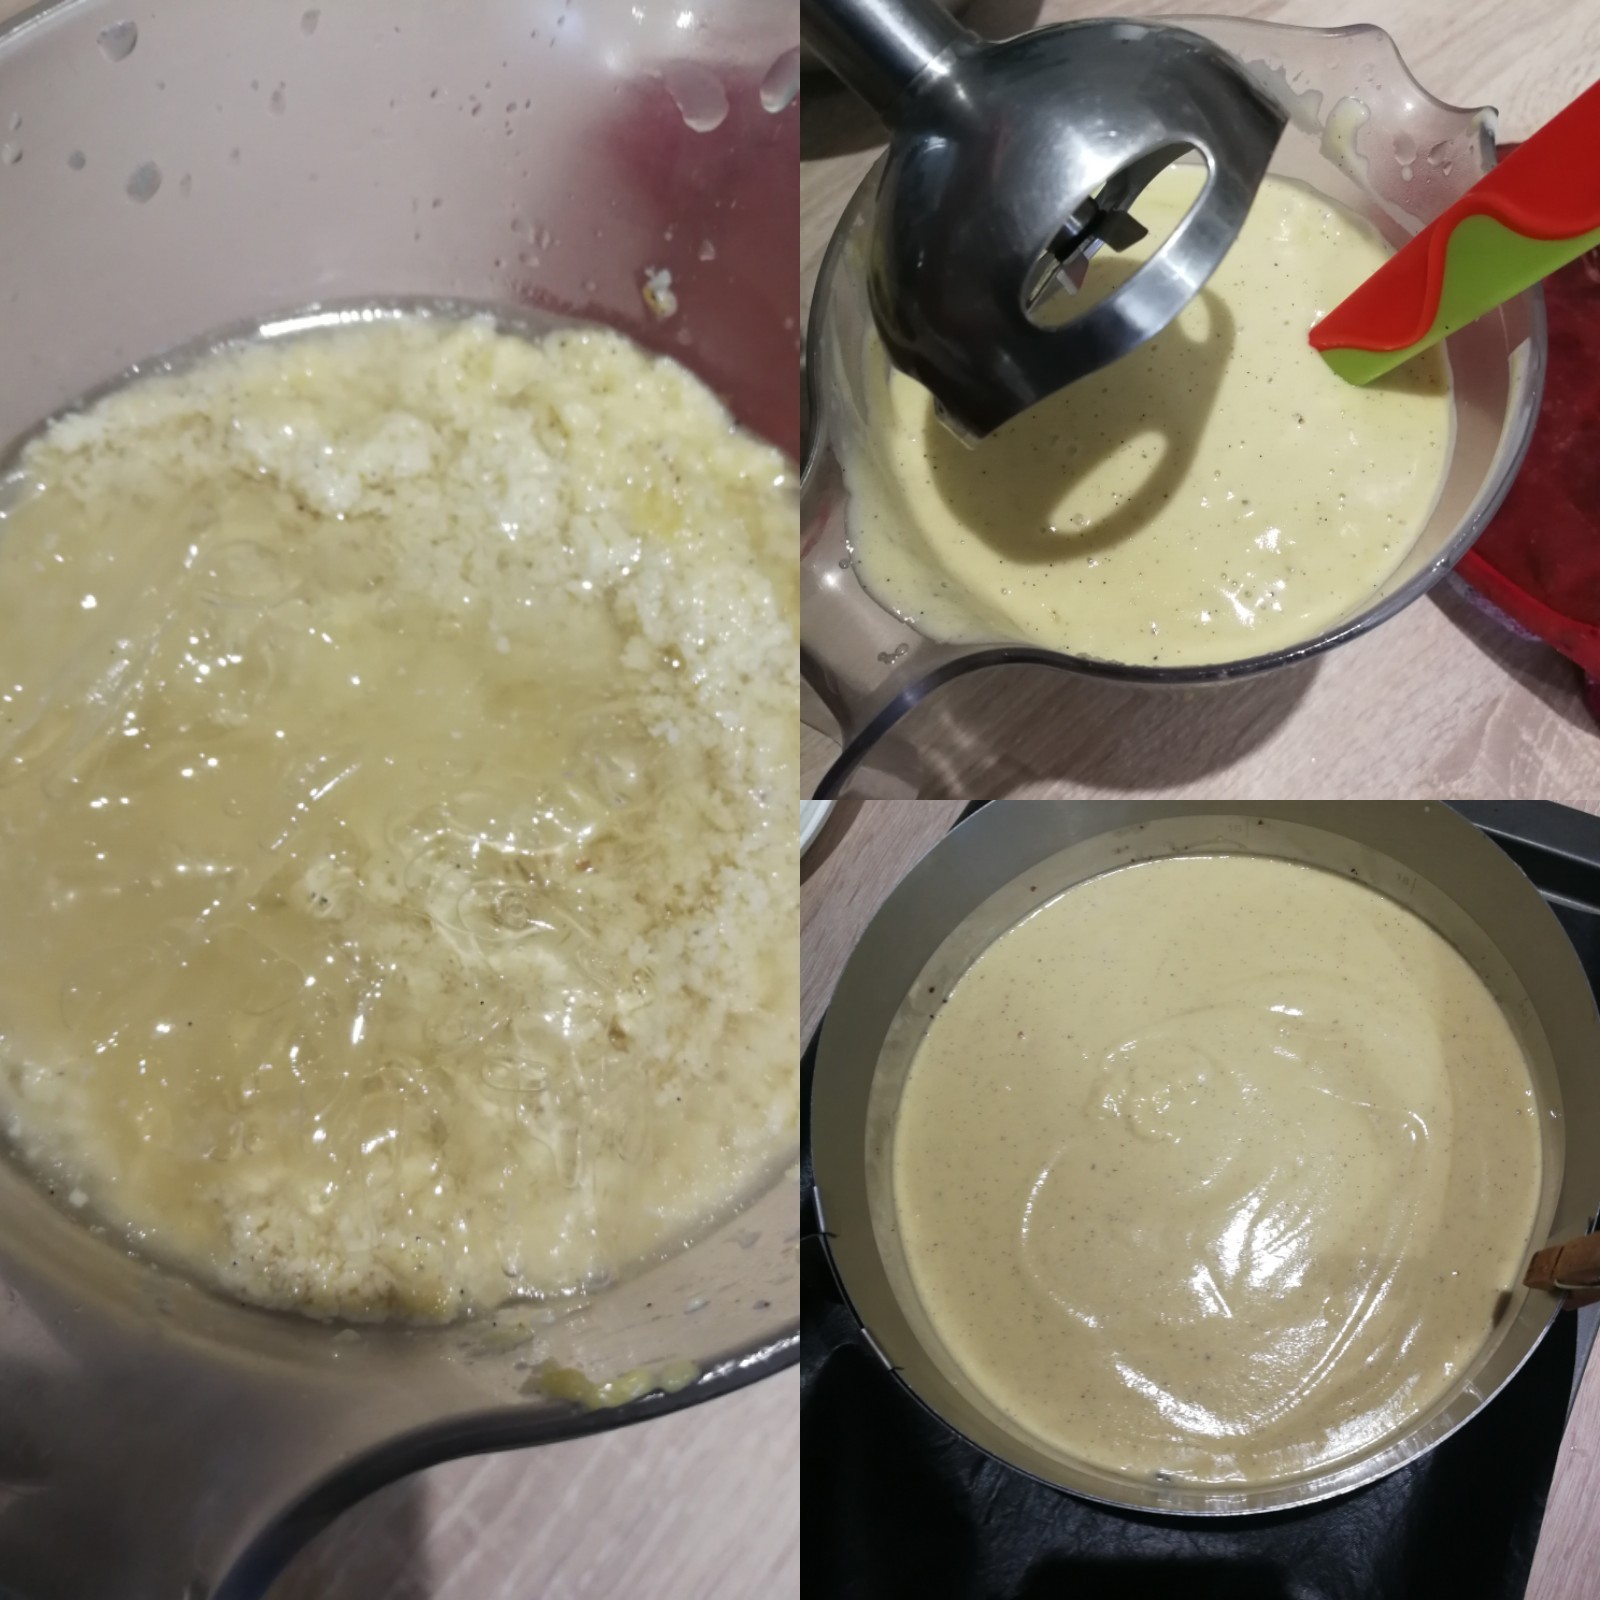 insert crème brulée